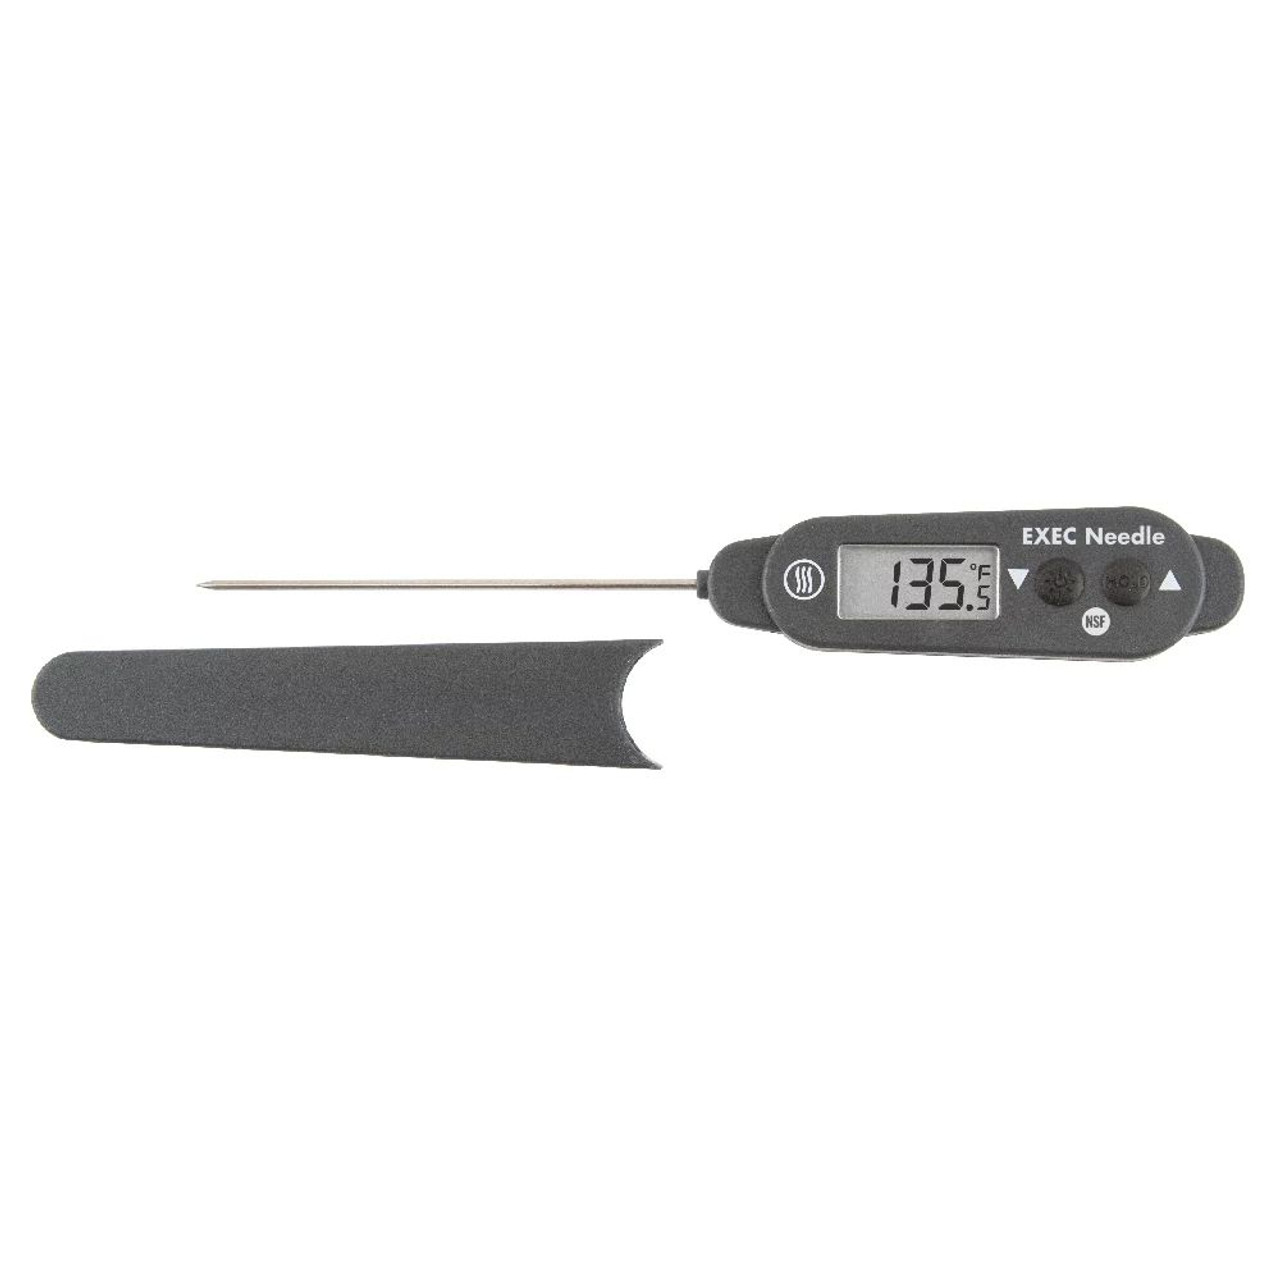 Tools - Thermometers - King Arthur Baking Company